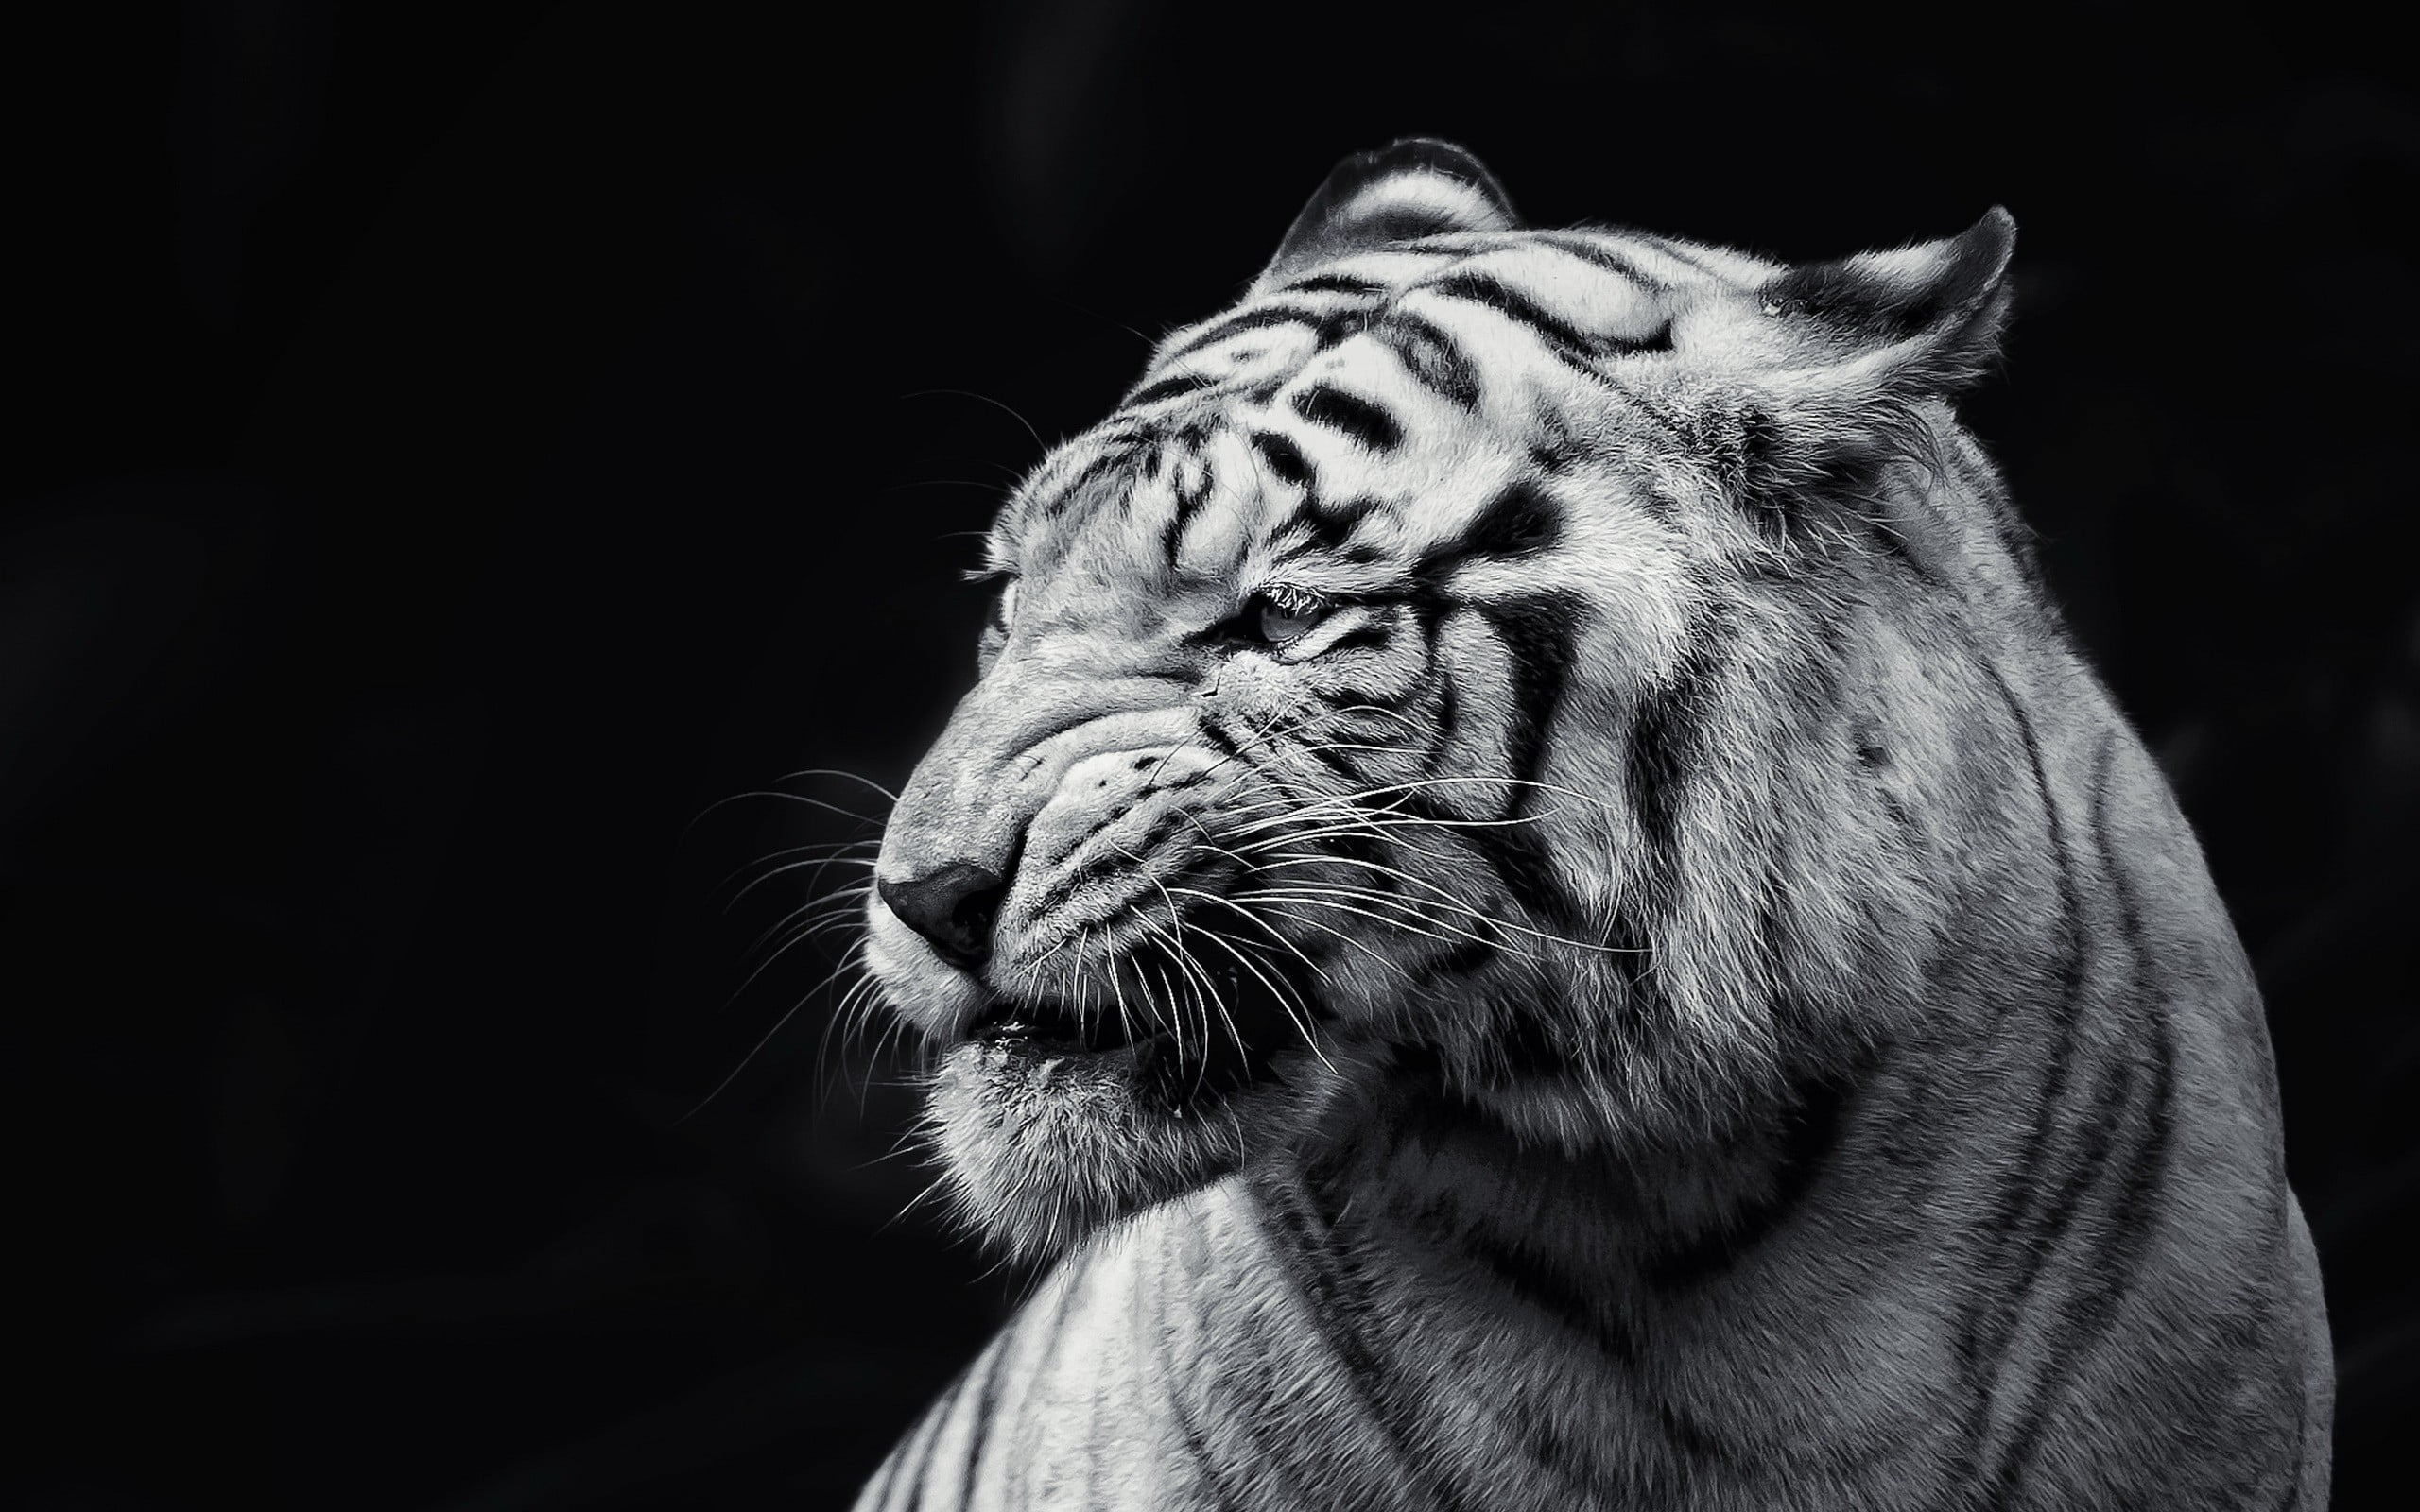 grayscale photography of tiger, cat, animals, albino, monochrome